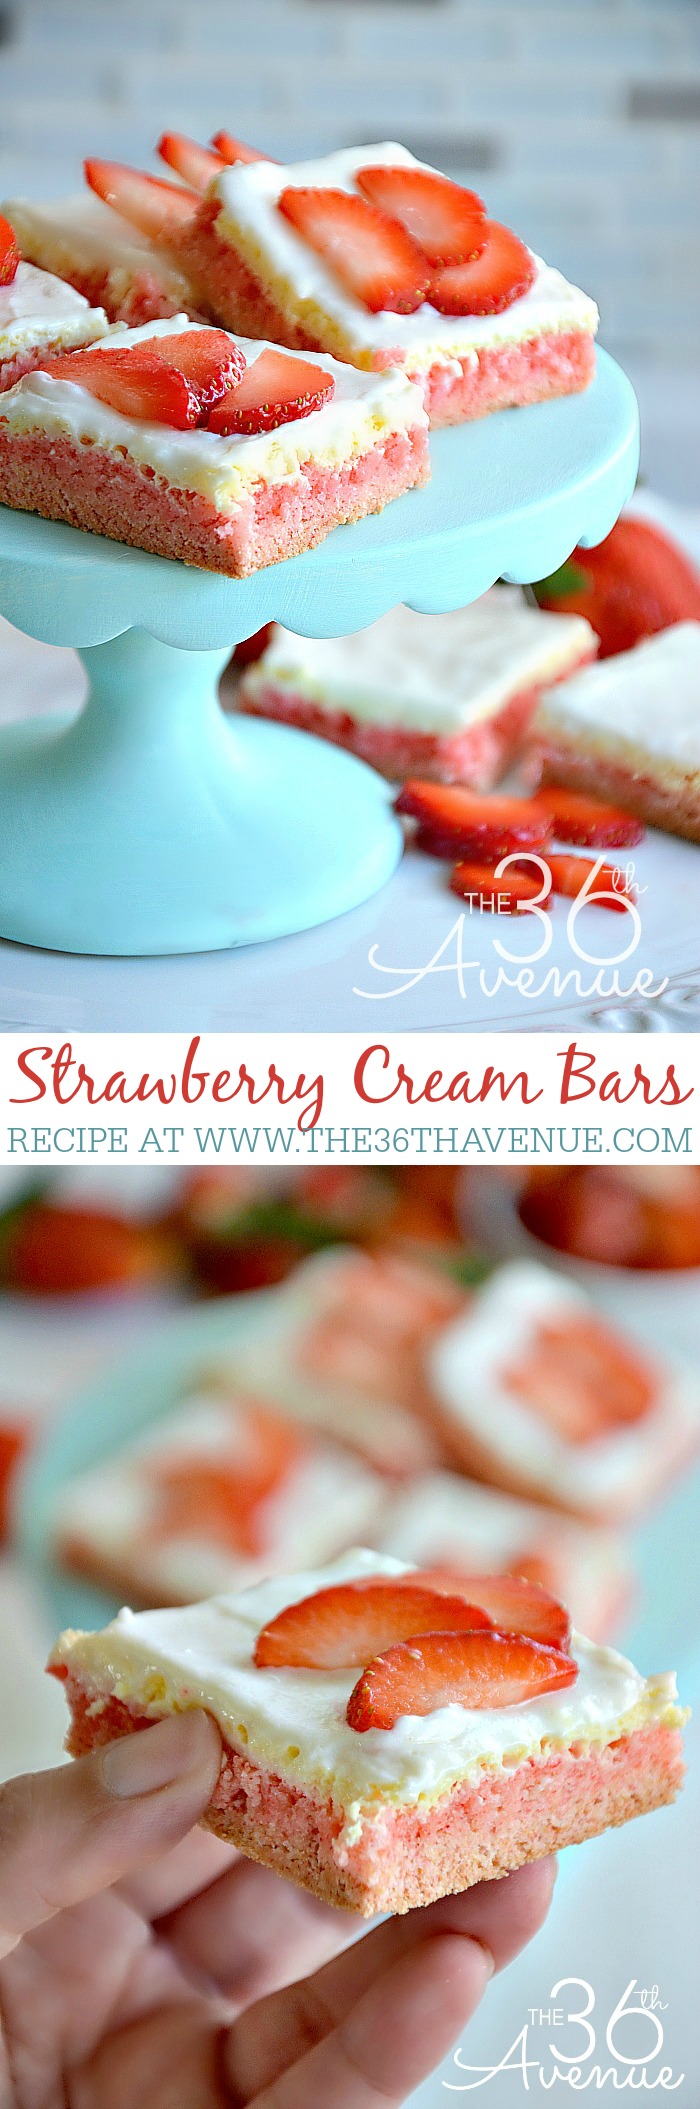 Strawberry Cream Bar Recipe by the36thavenue.com